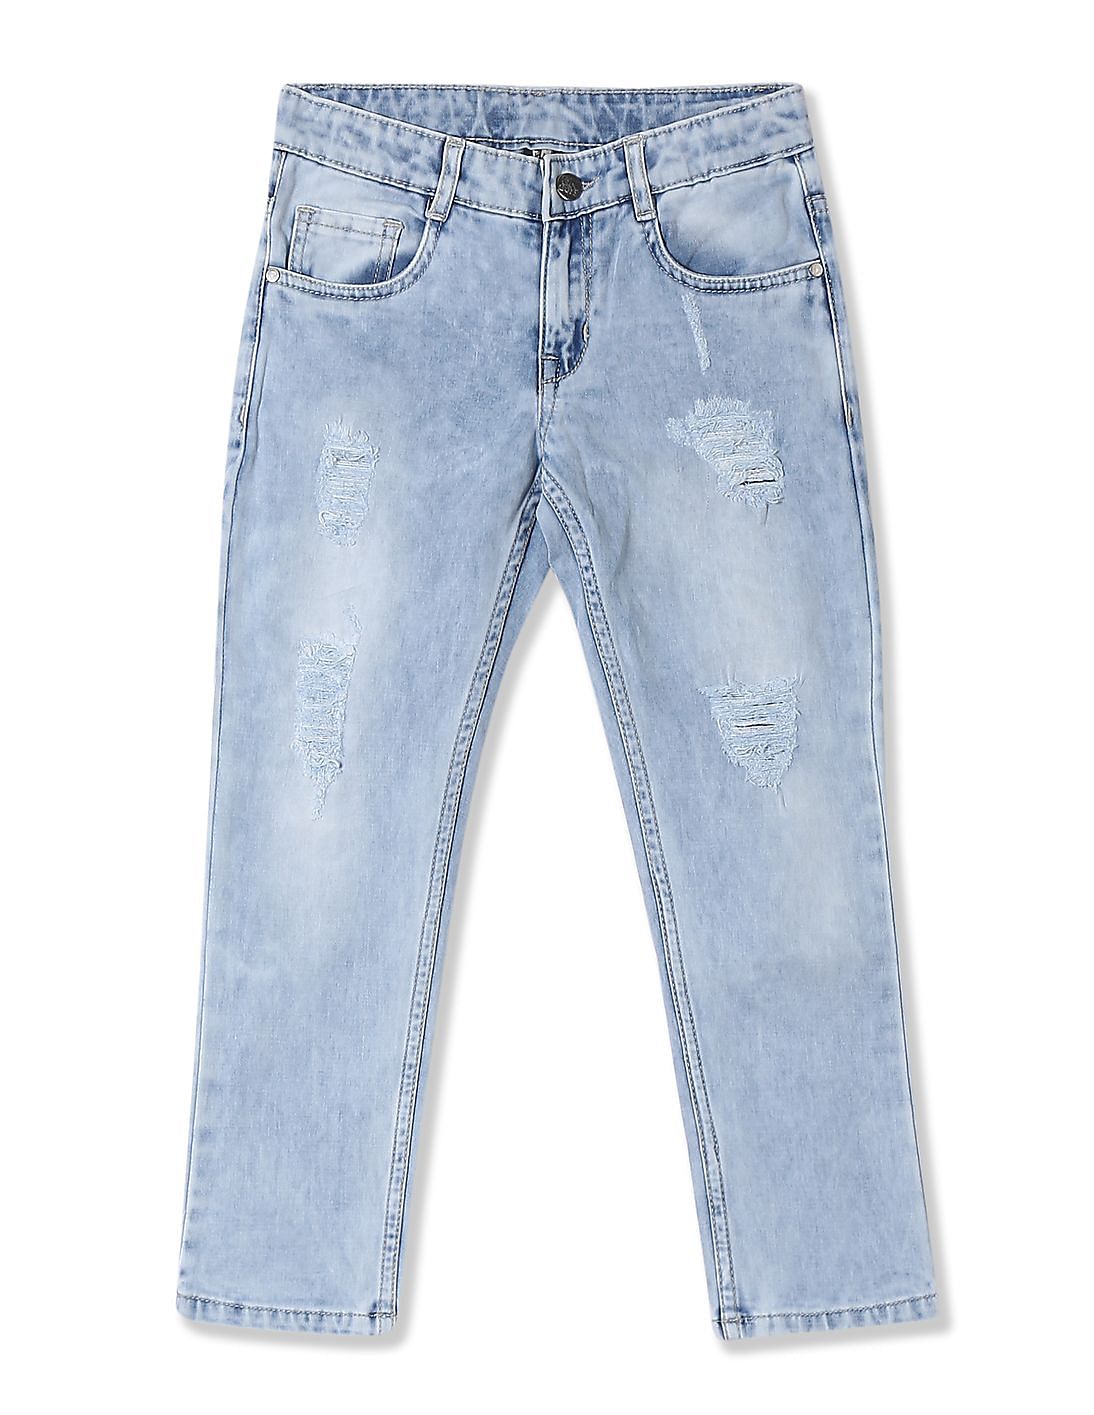 Buy FM Boys Skinny Fit Distressed Jeans - NNNOW.com